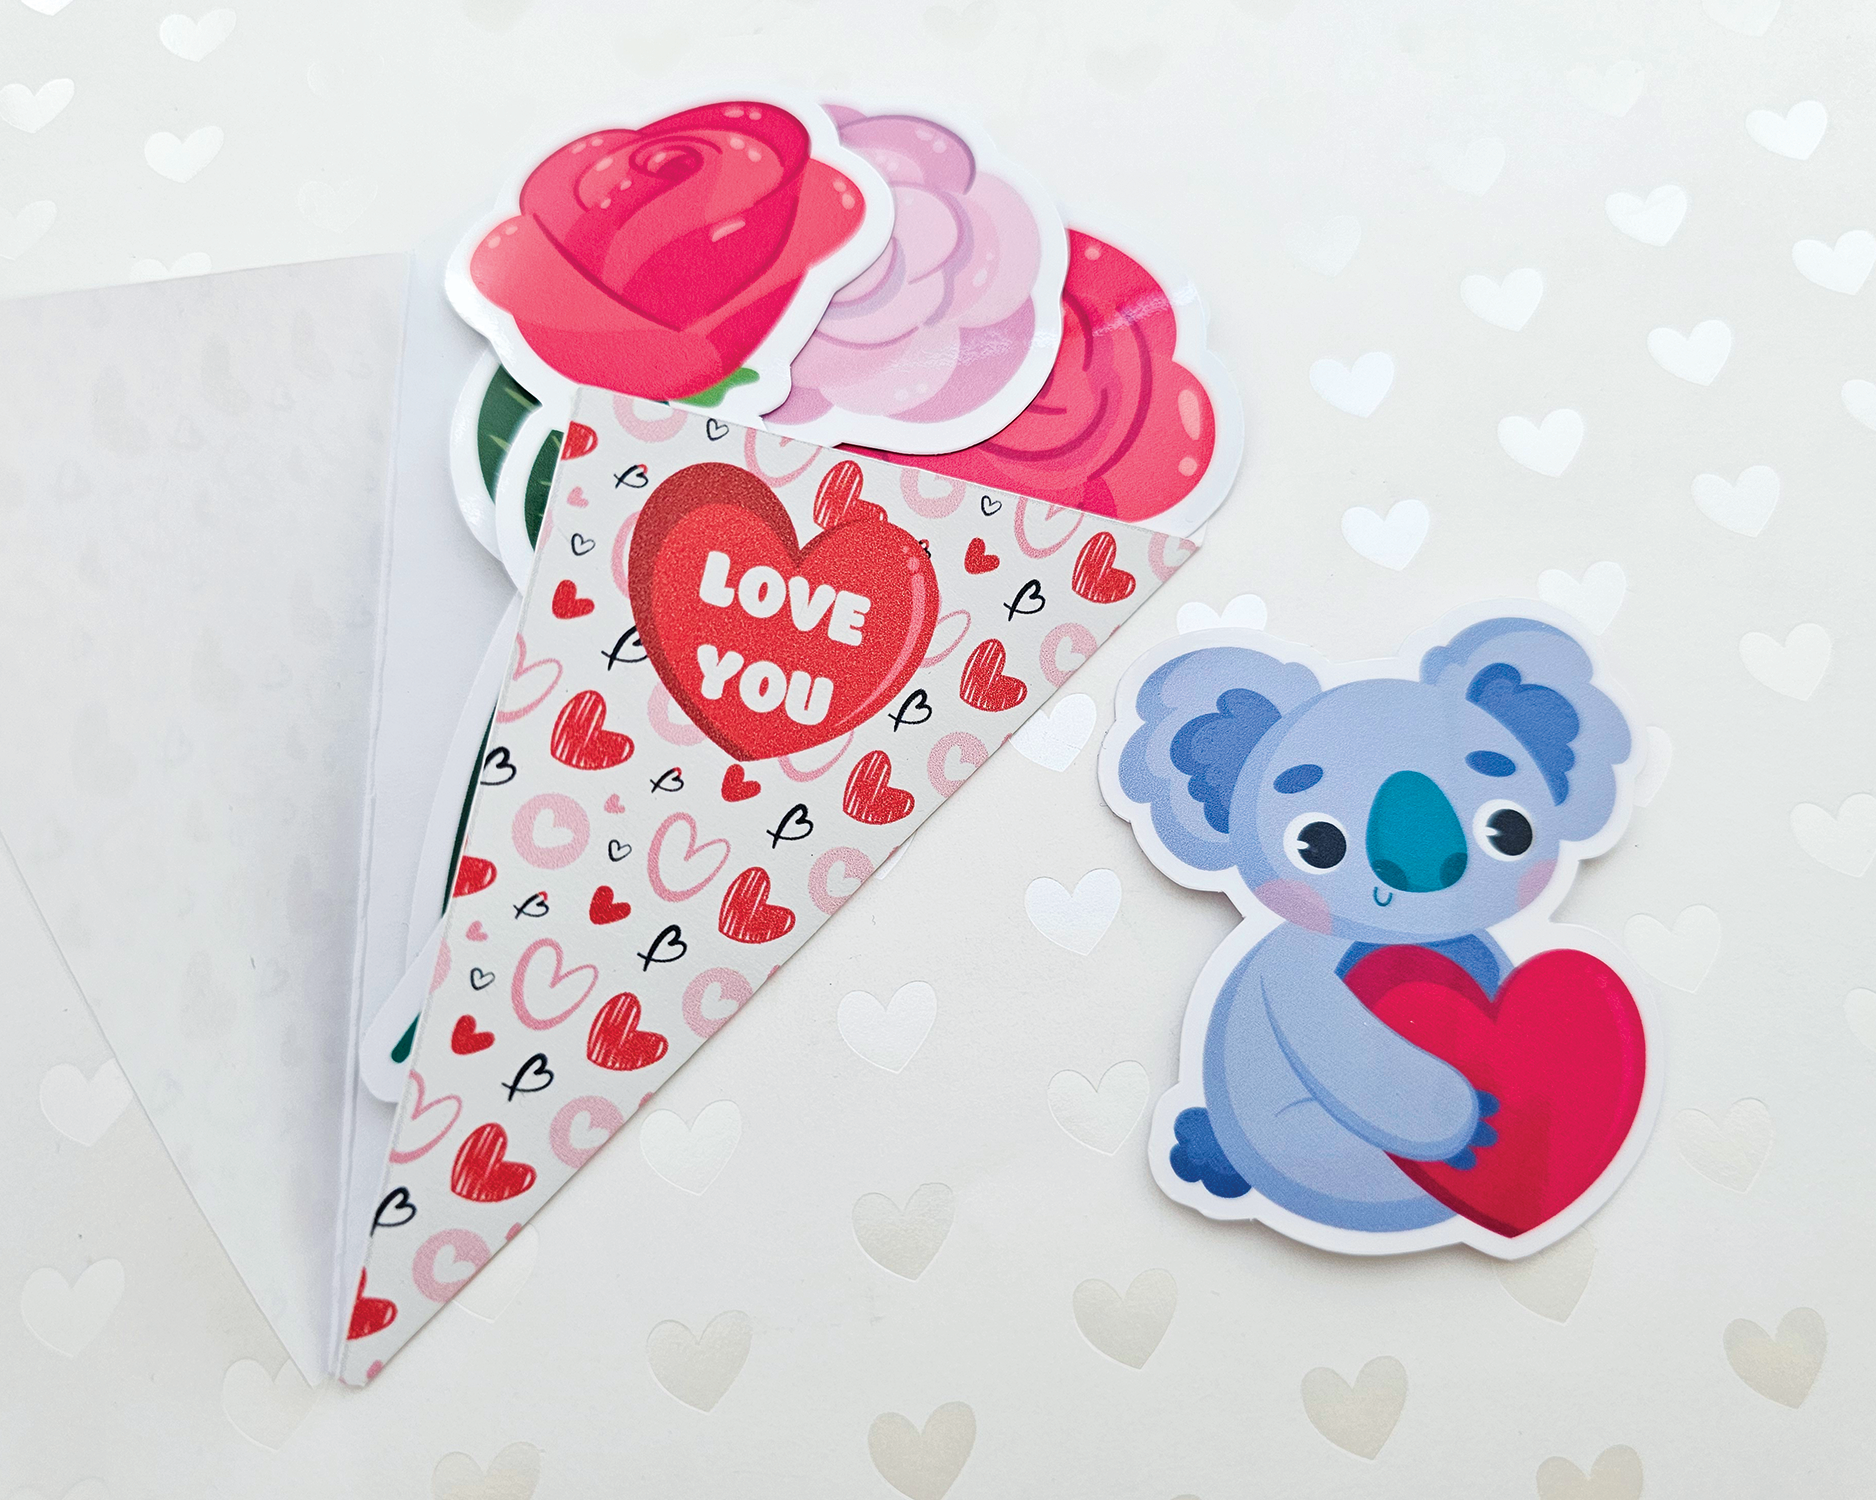 Love and Romance Sticker Bouquet